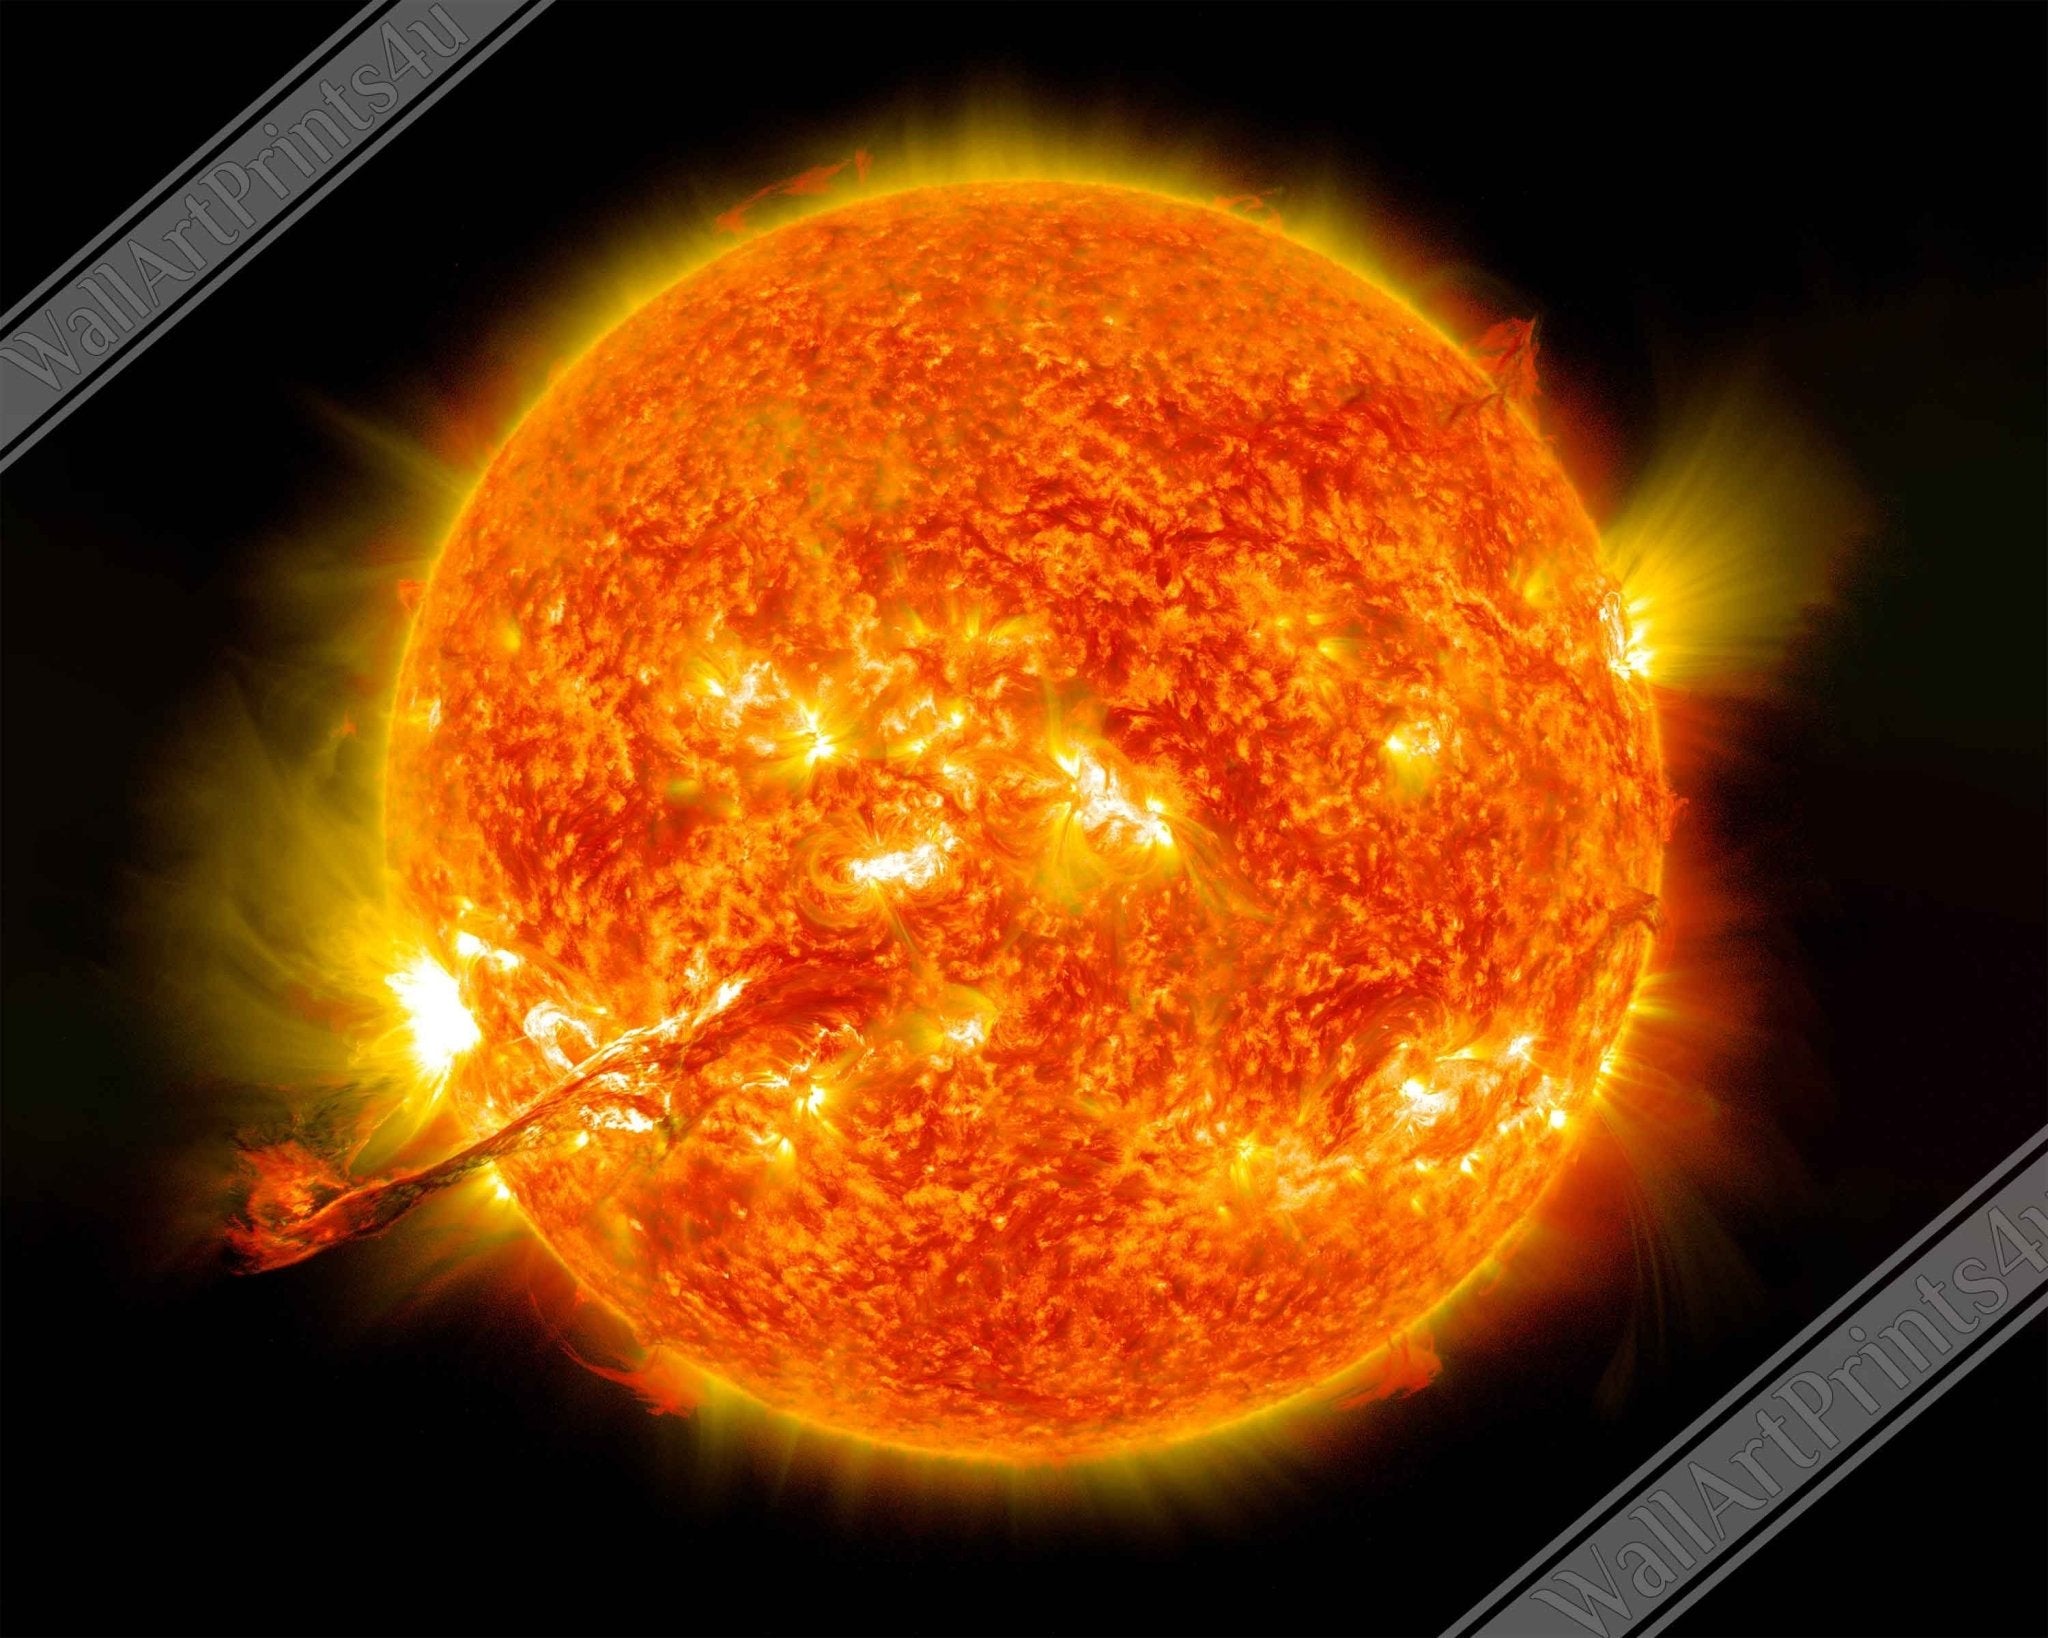 Sun Poster Print - Nasa Sun Eruption 2012 - Poster Of The Sun With Coronal Mass Ejection - WallArtPrints4U